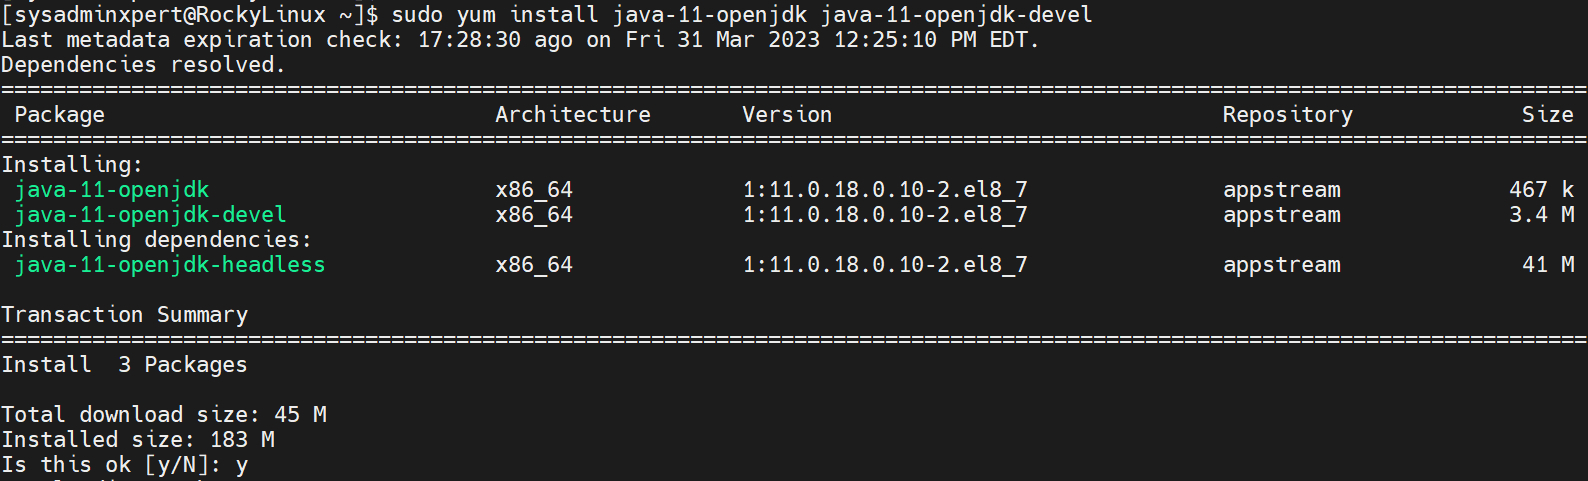 Upgrade Java 8 To Java 11 on Rocky Linux